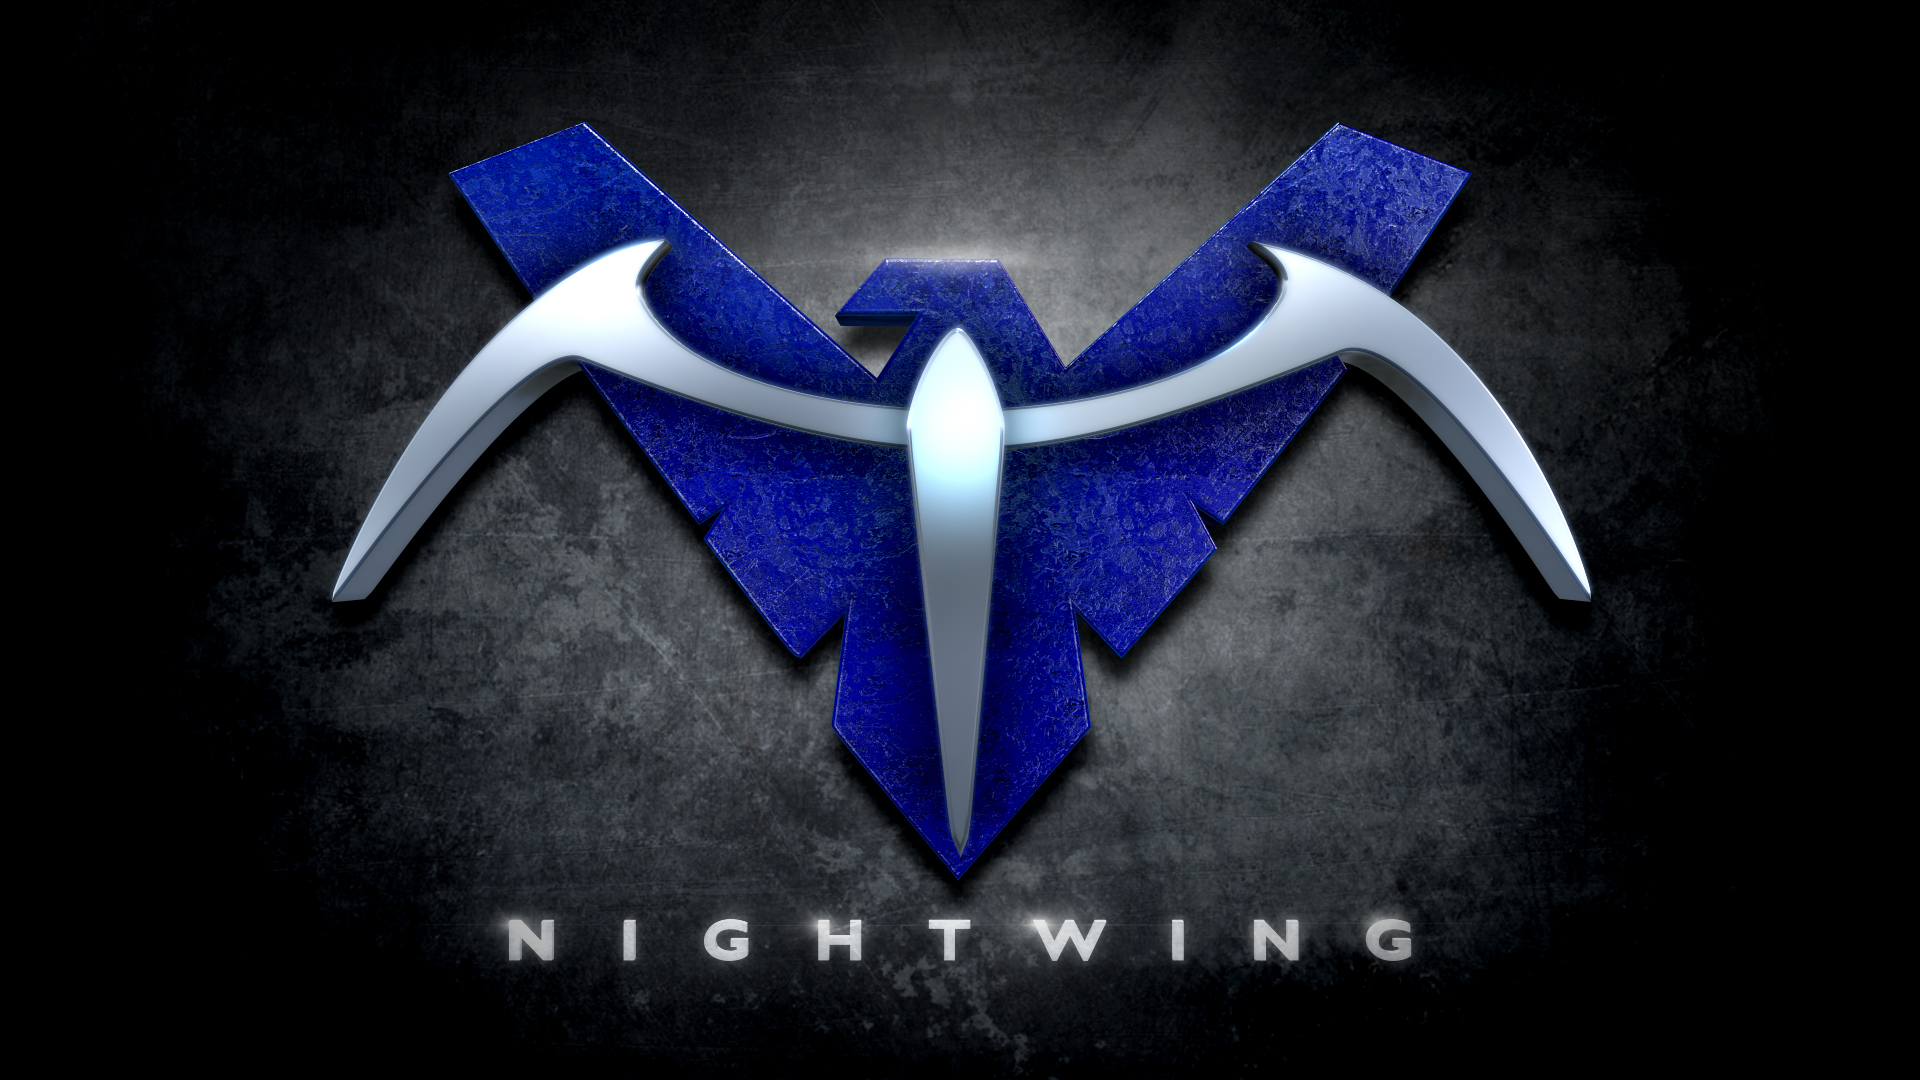 Nightwing Symbol Wallpaper Hd nightwing logo beloeil jones